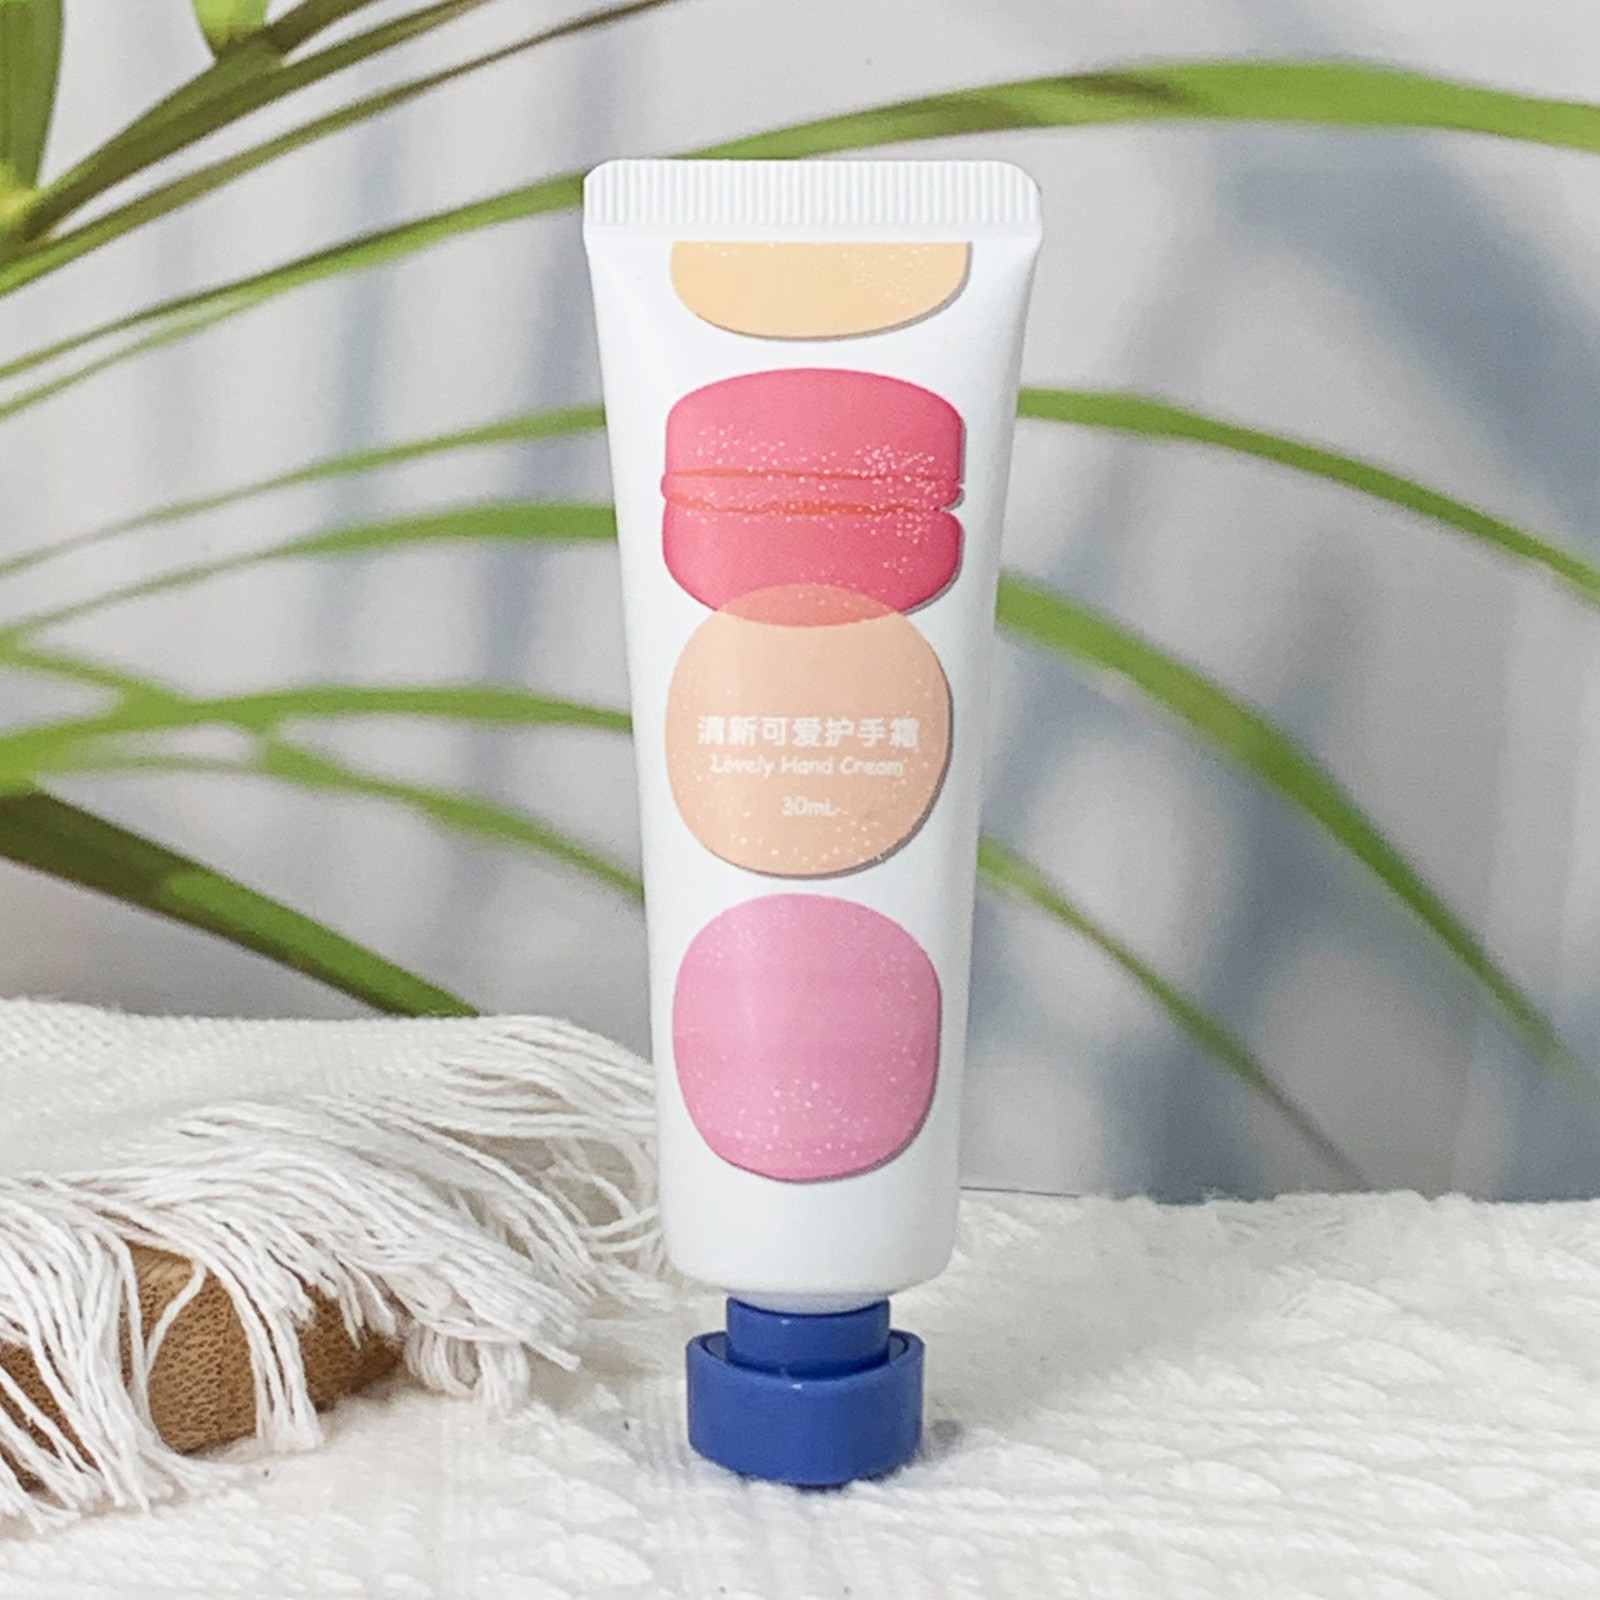 Sunscreen lotion tube